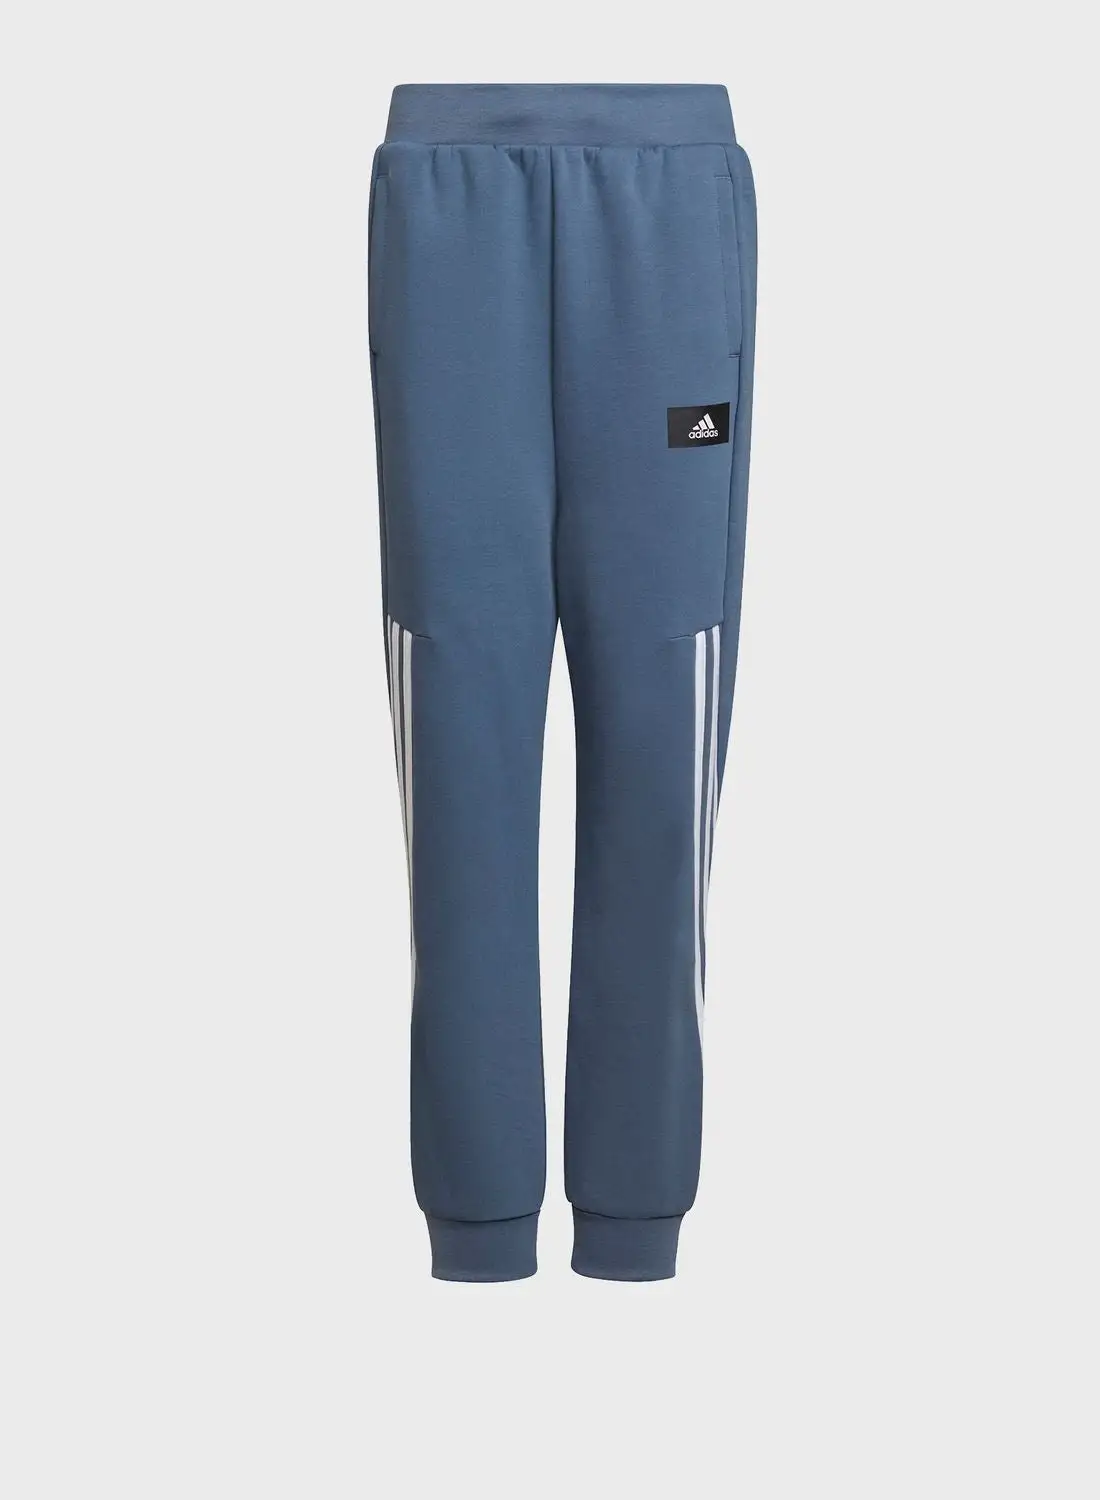 Adidas Youth 3 Stripe Sweatpants